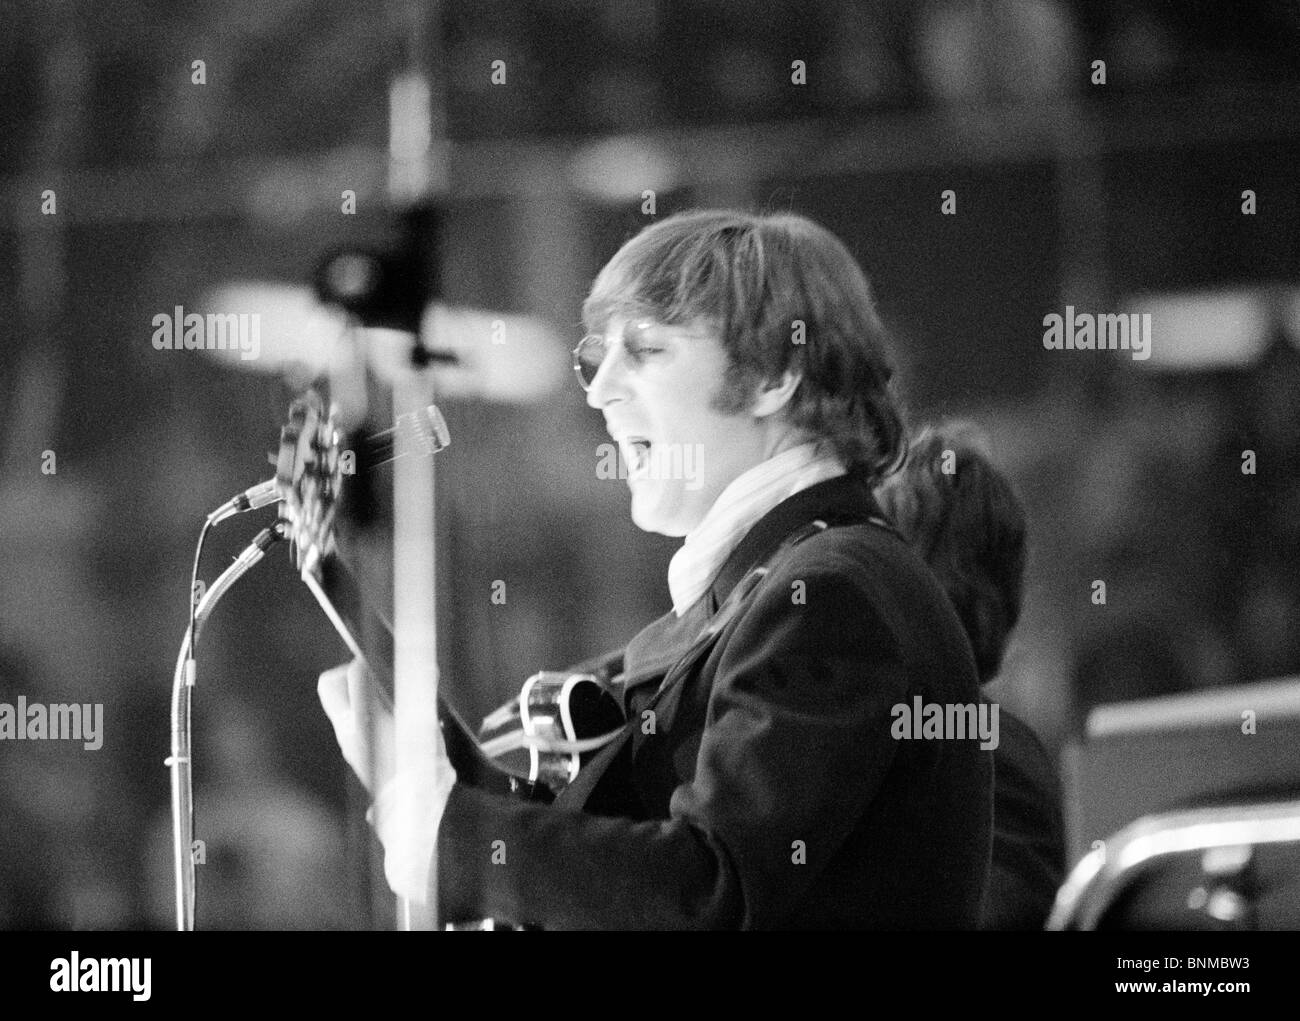 The Beatles music pop group band concert Germany Essen 1966 John Lennon  singer Stock Photo - Alamy